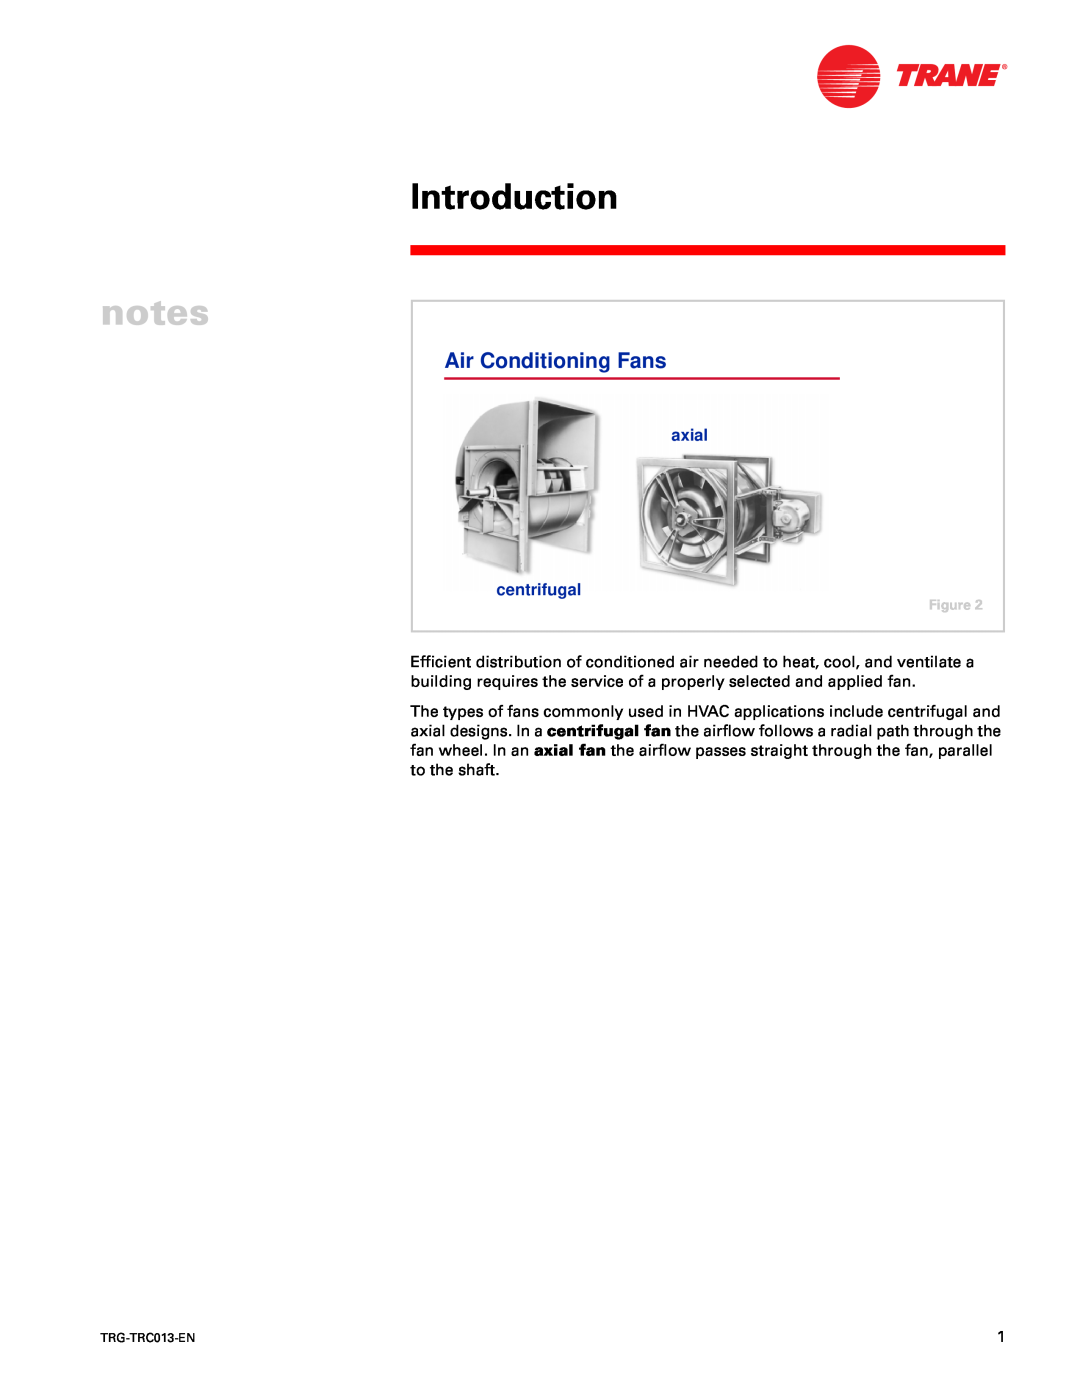 Trane TRG-TRC013-EN manual Air Conditioning Fans, axial centrifugal 